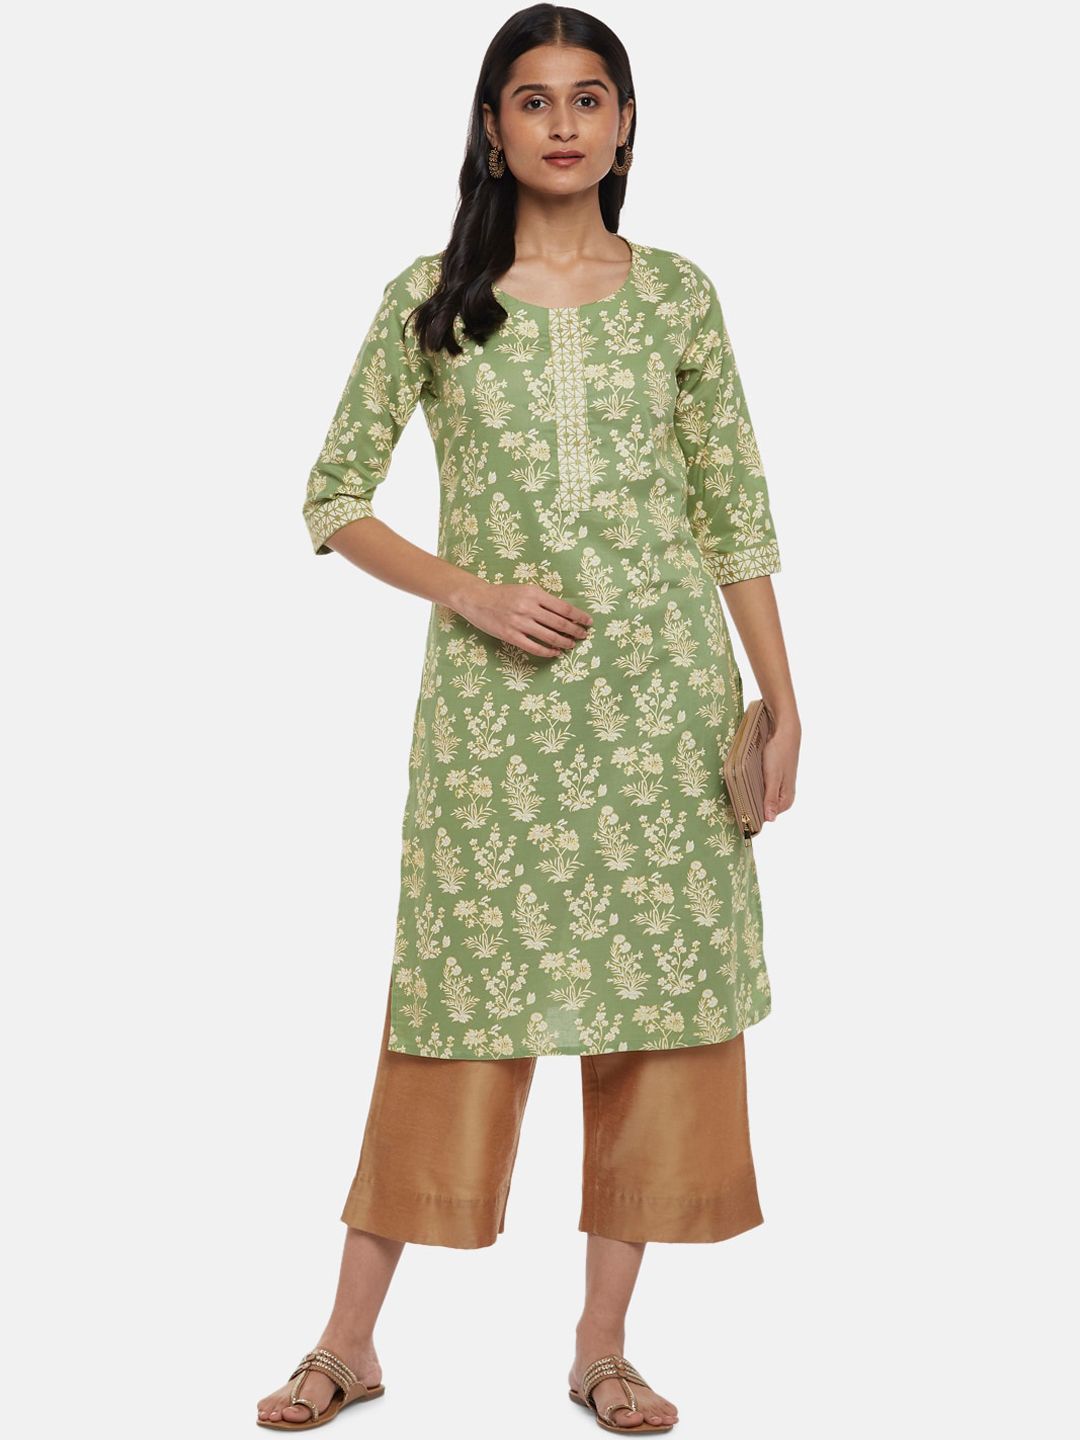 RANGMANCH BY PANTALOONS Women Green Paisley Printed Thread Work Kurta Price in India